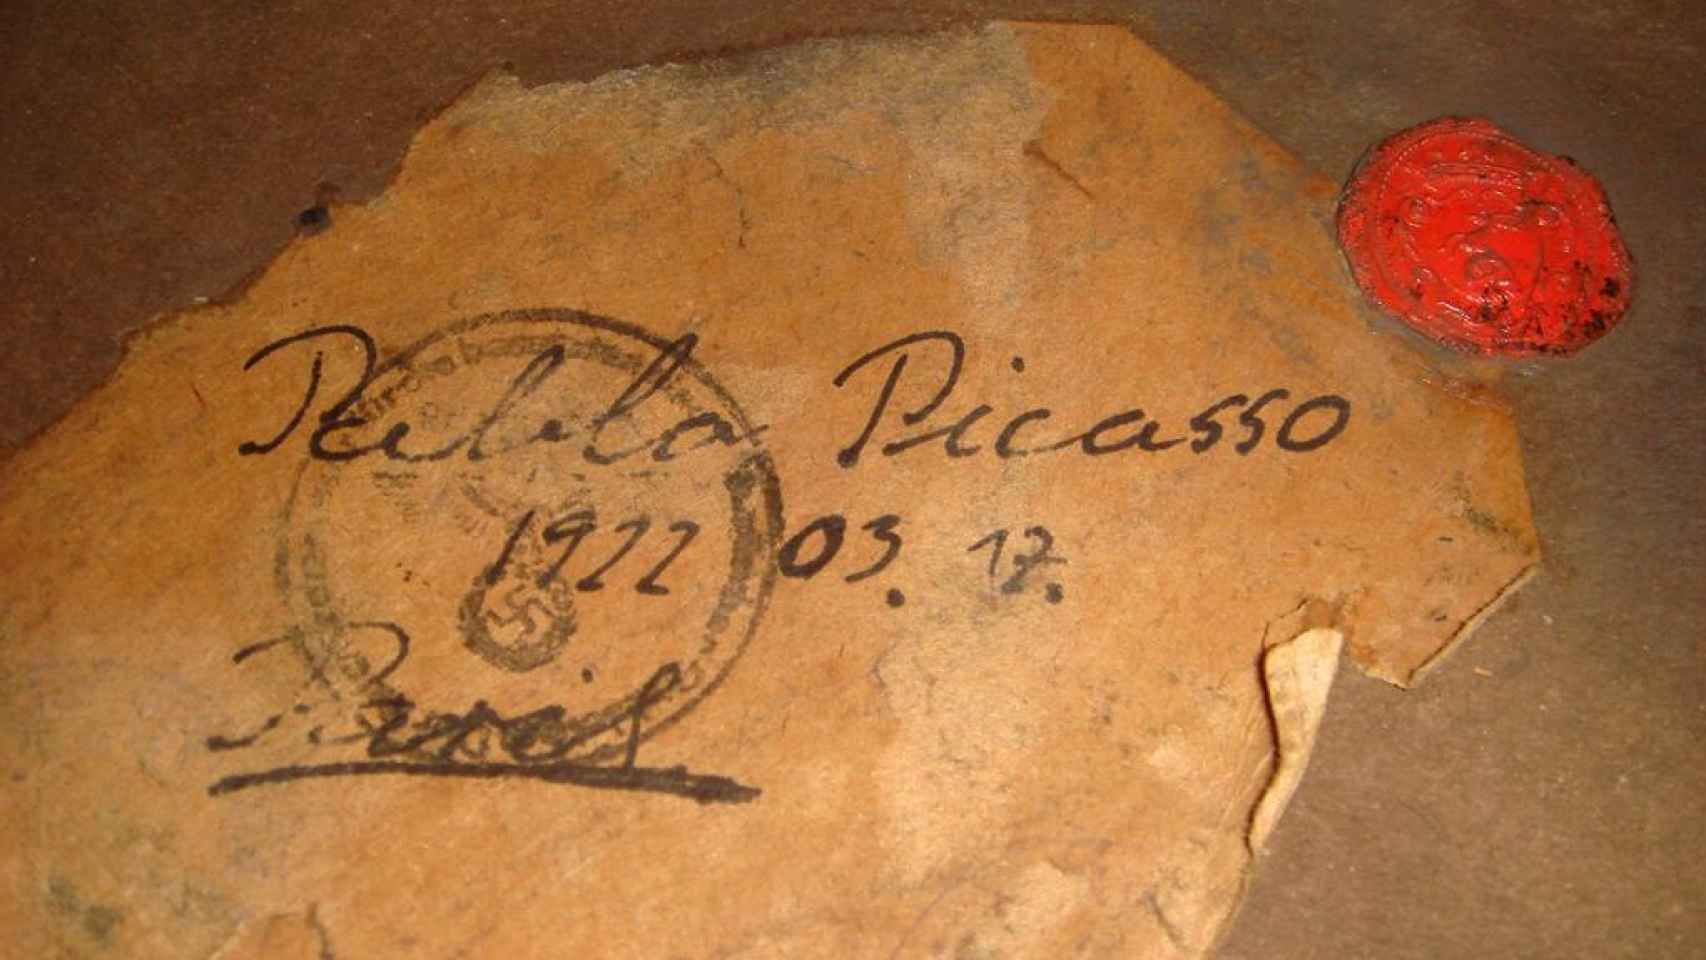 La firma falsificada de Pablo Picasso, según el tasador Jorge Llopis.